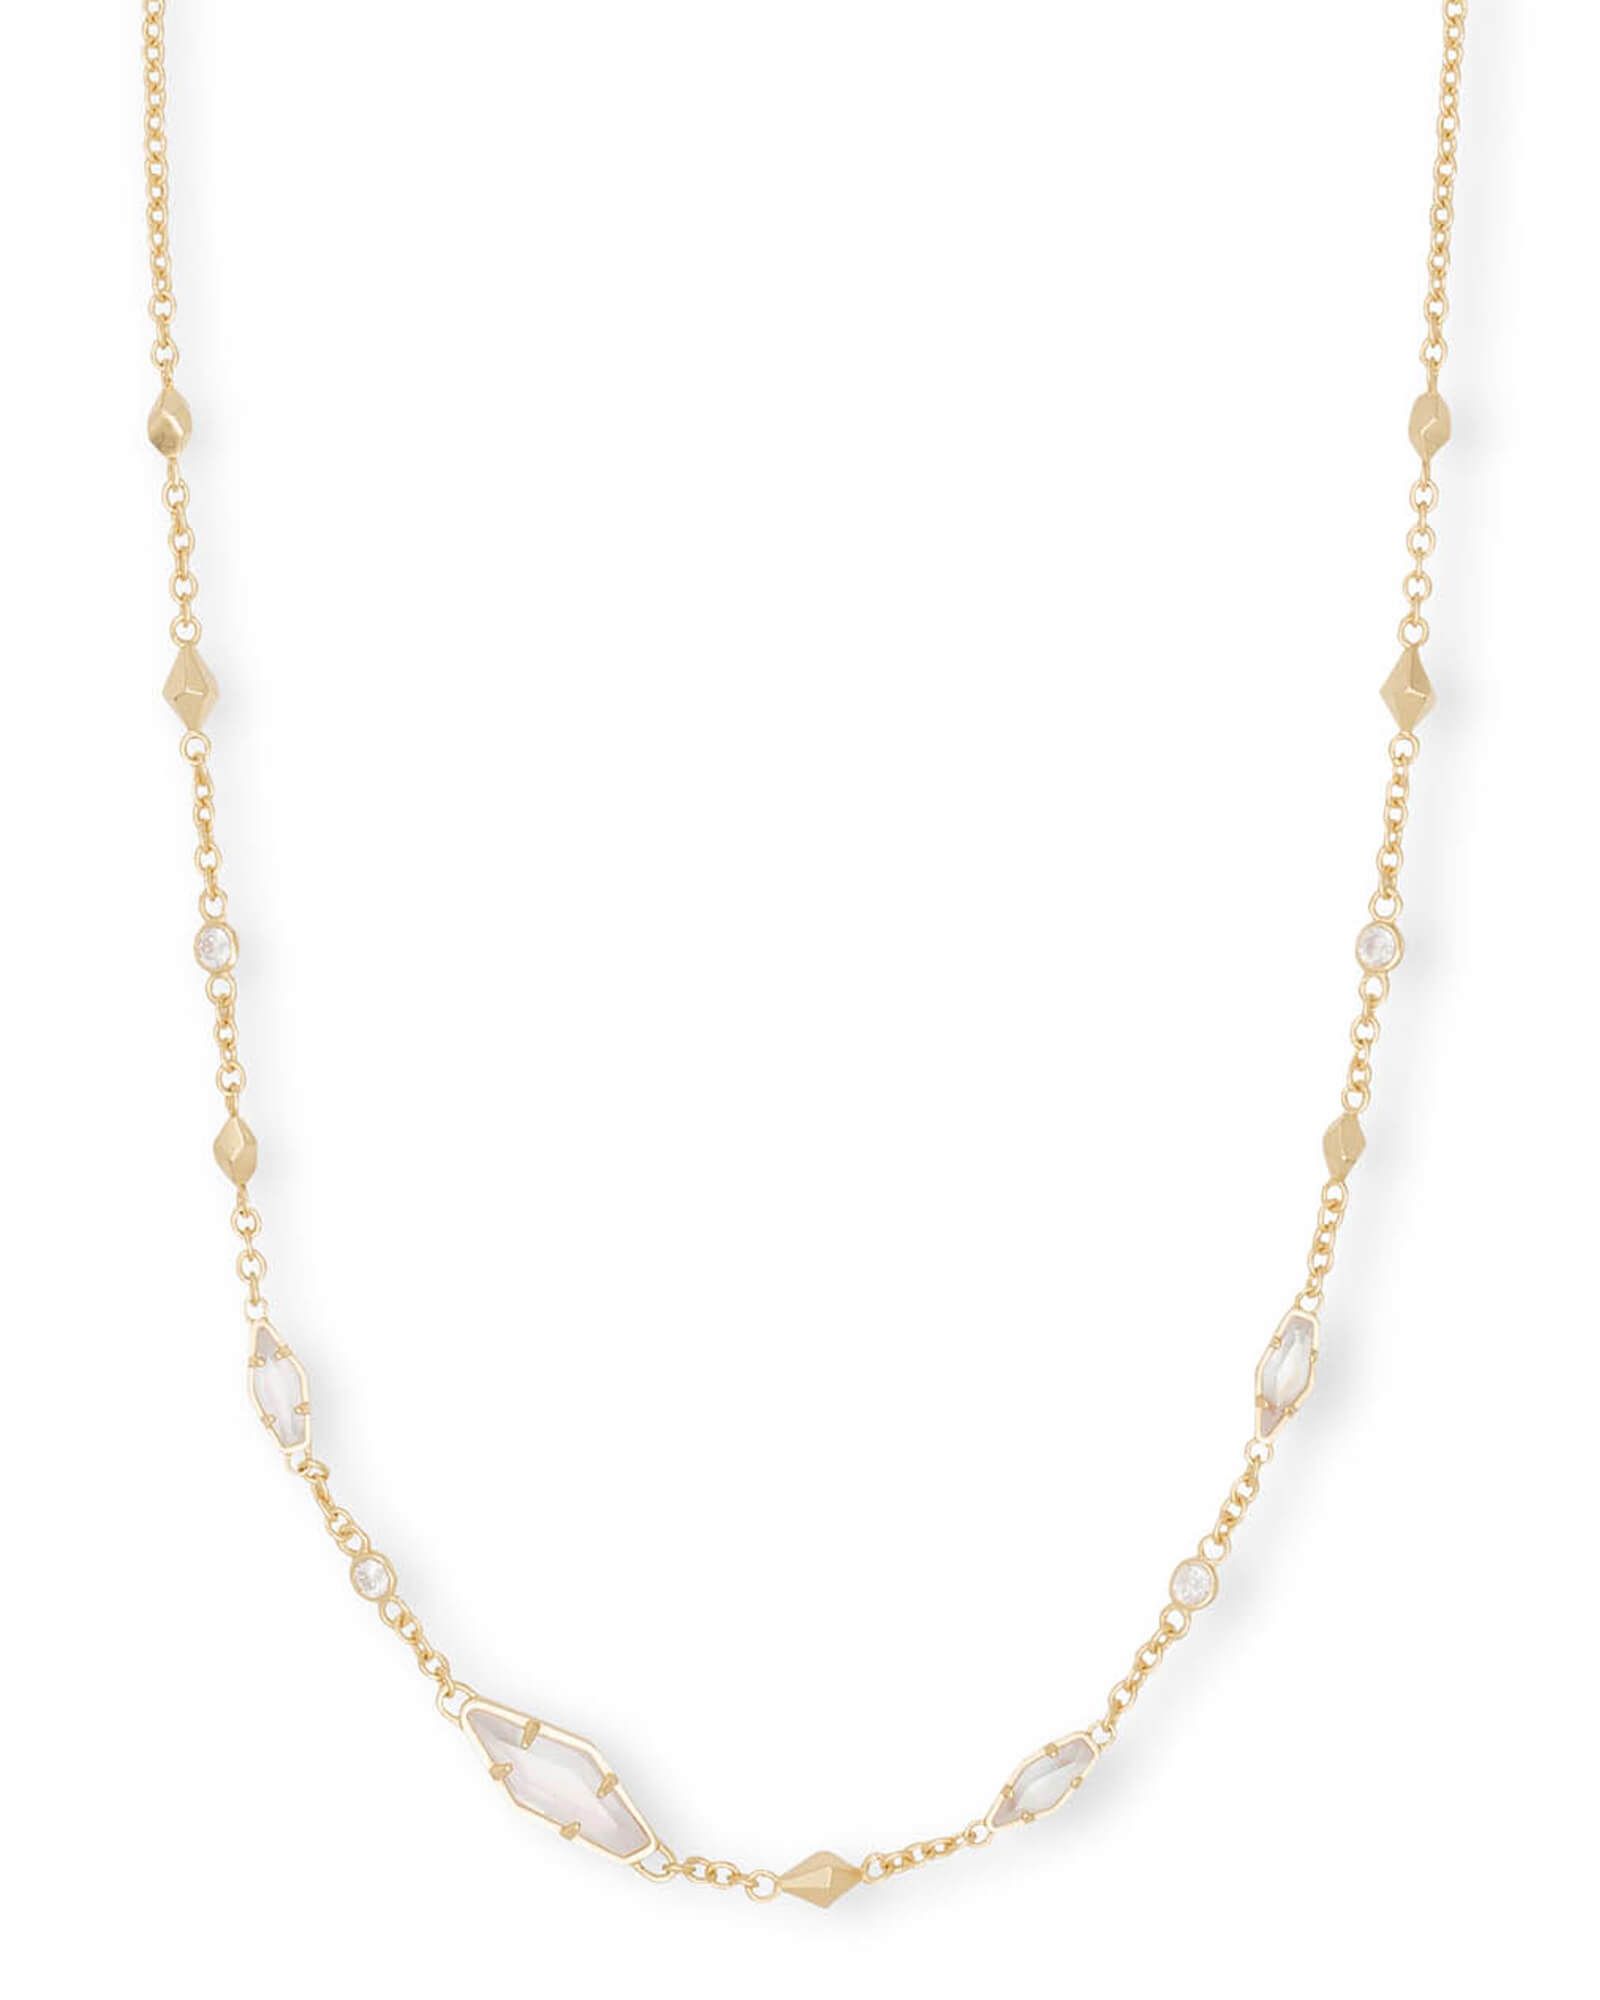 Debra Choker Necklace in Gold | Jewelry | Kendra Scott | Kendra Scott